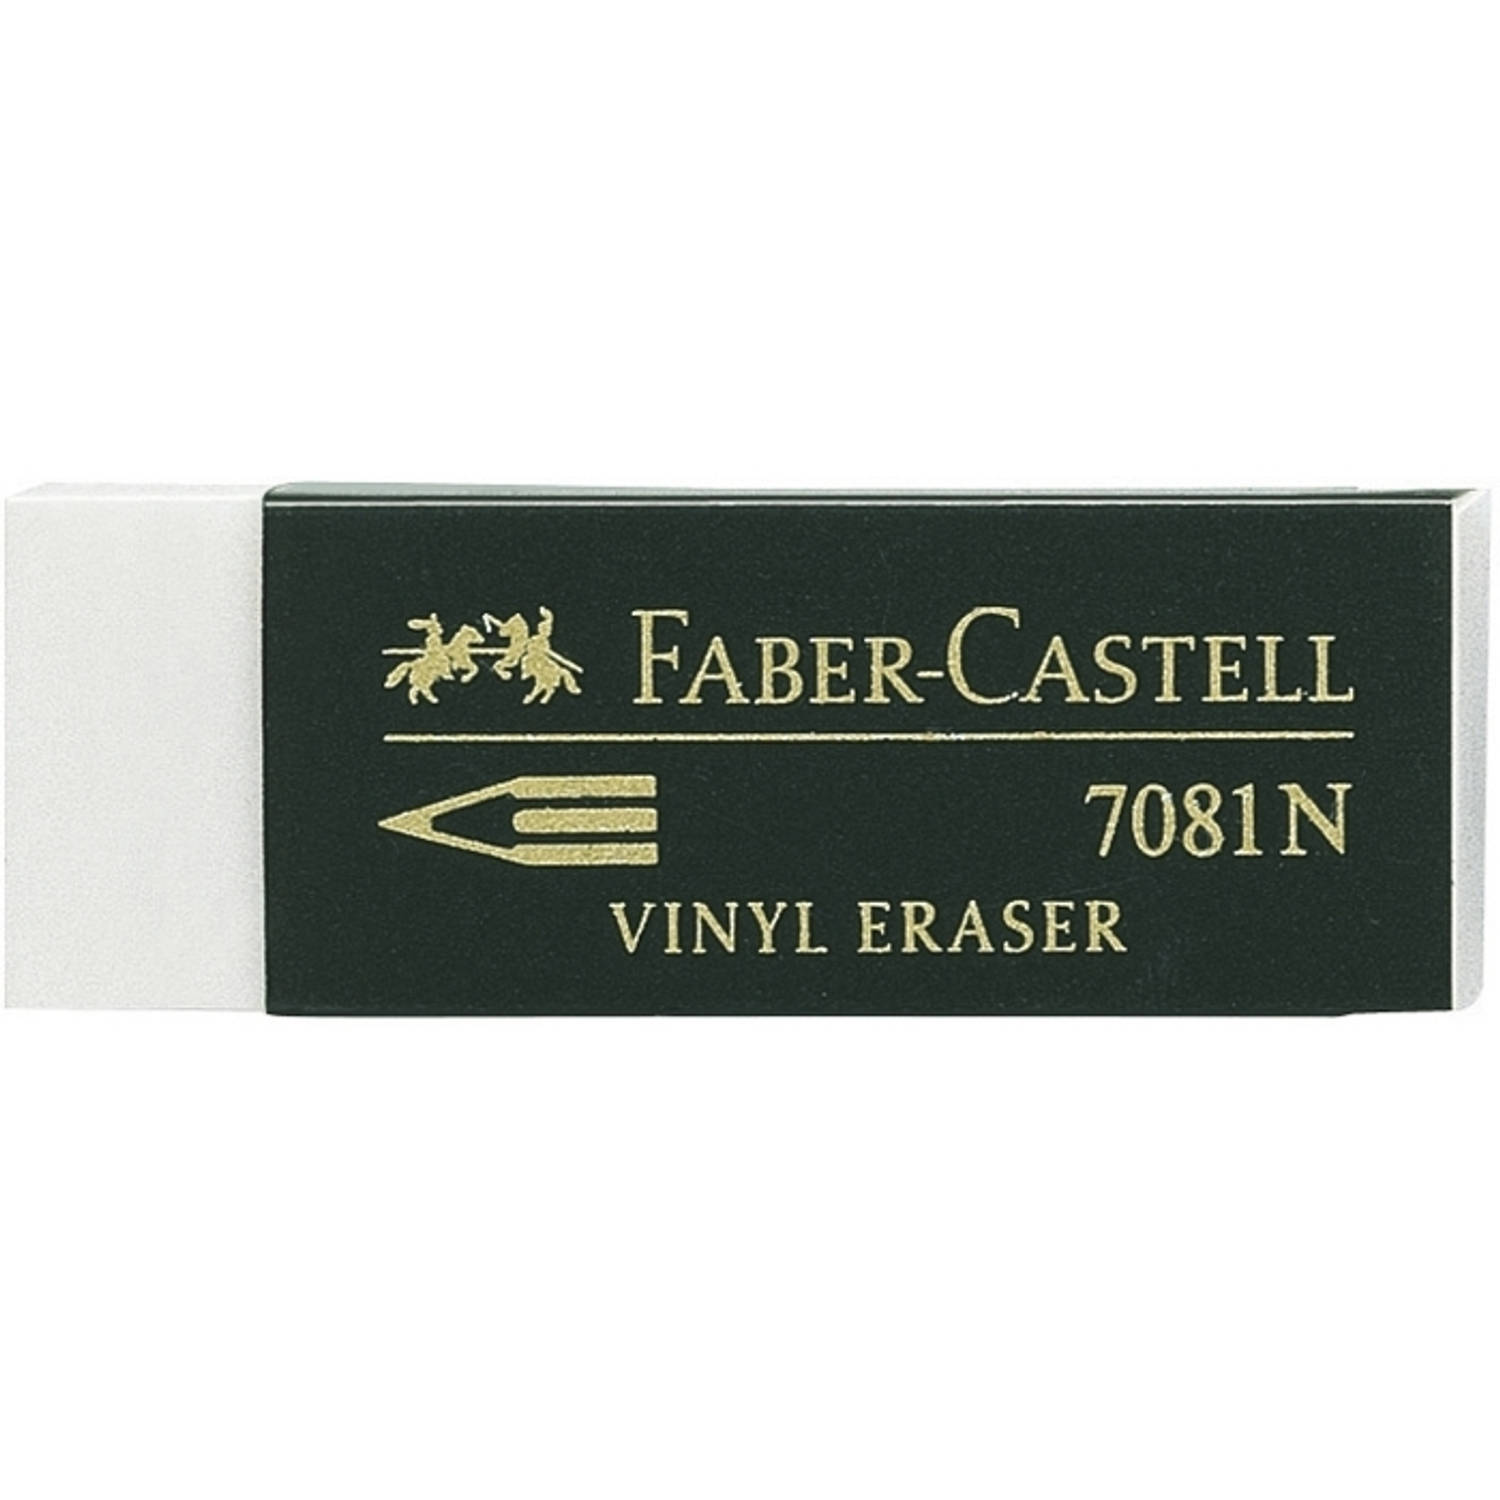 Gum Faber Castell 7081N plastic